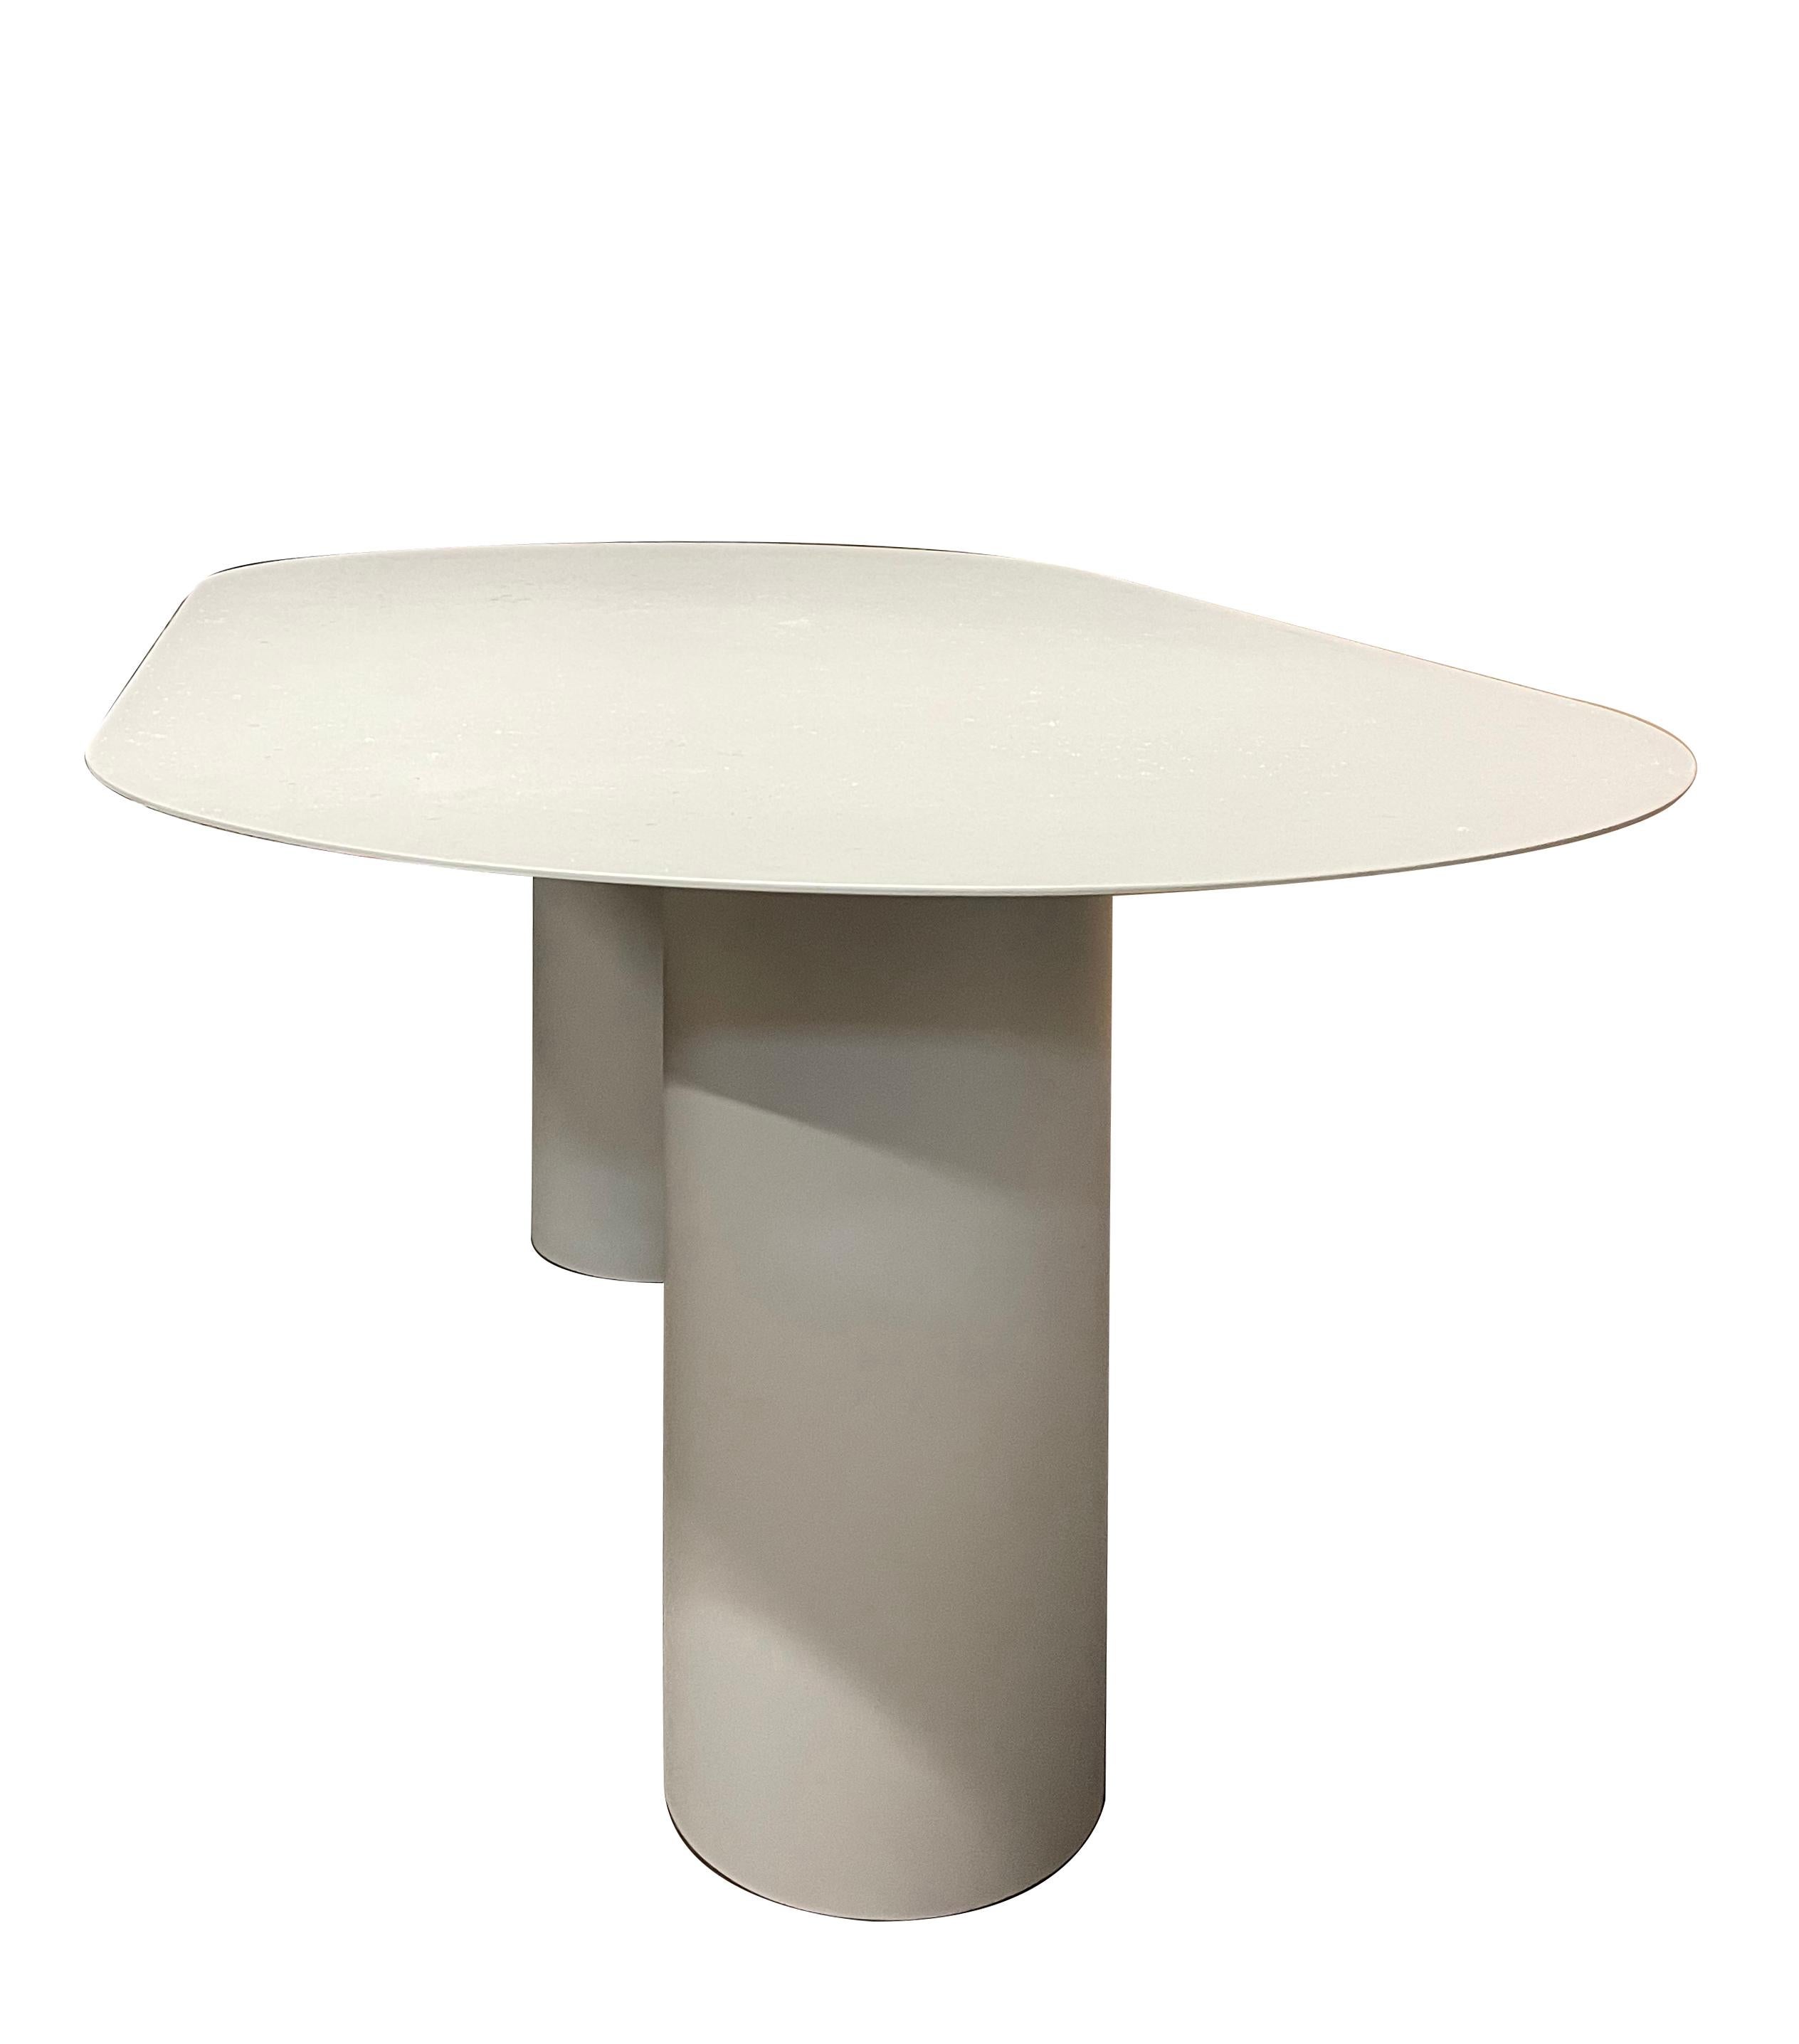 Belgian Aluminium Table by Chanel Kapitanj For Sale